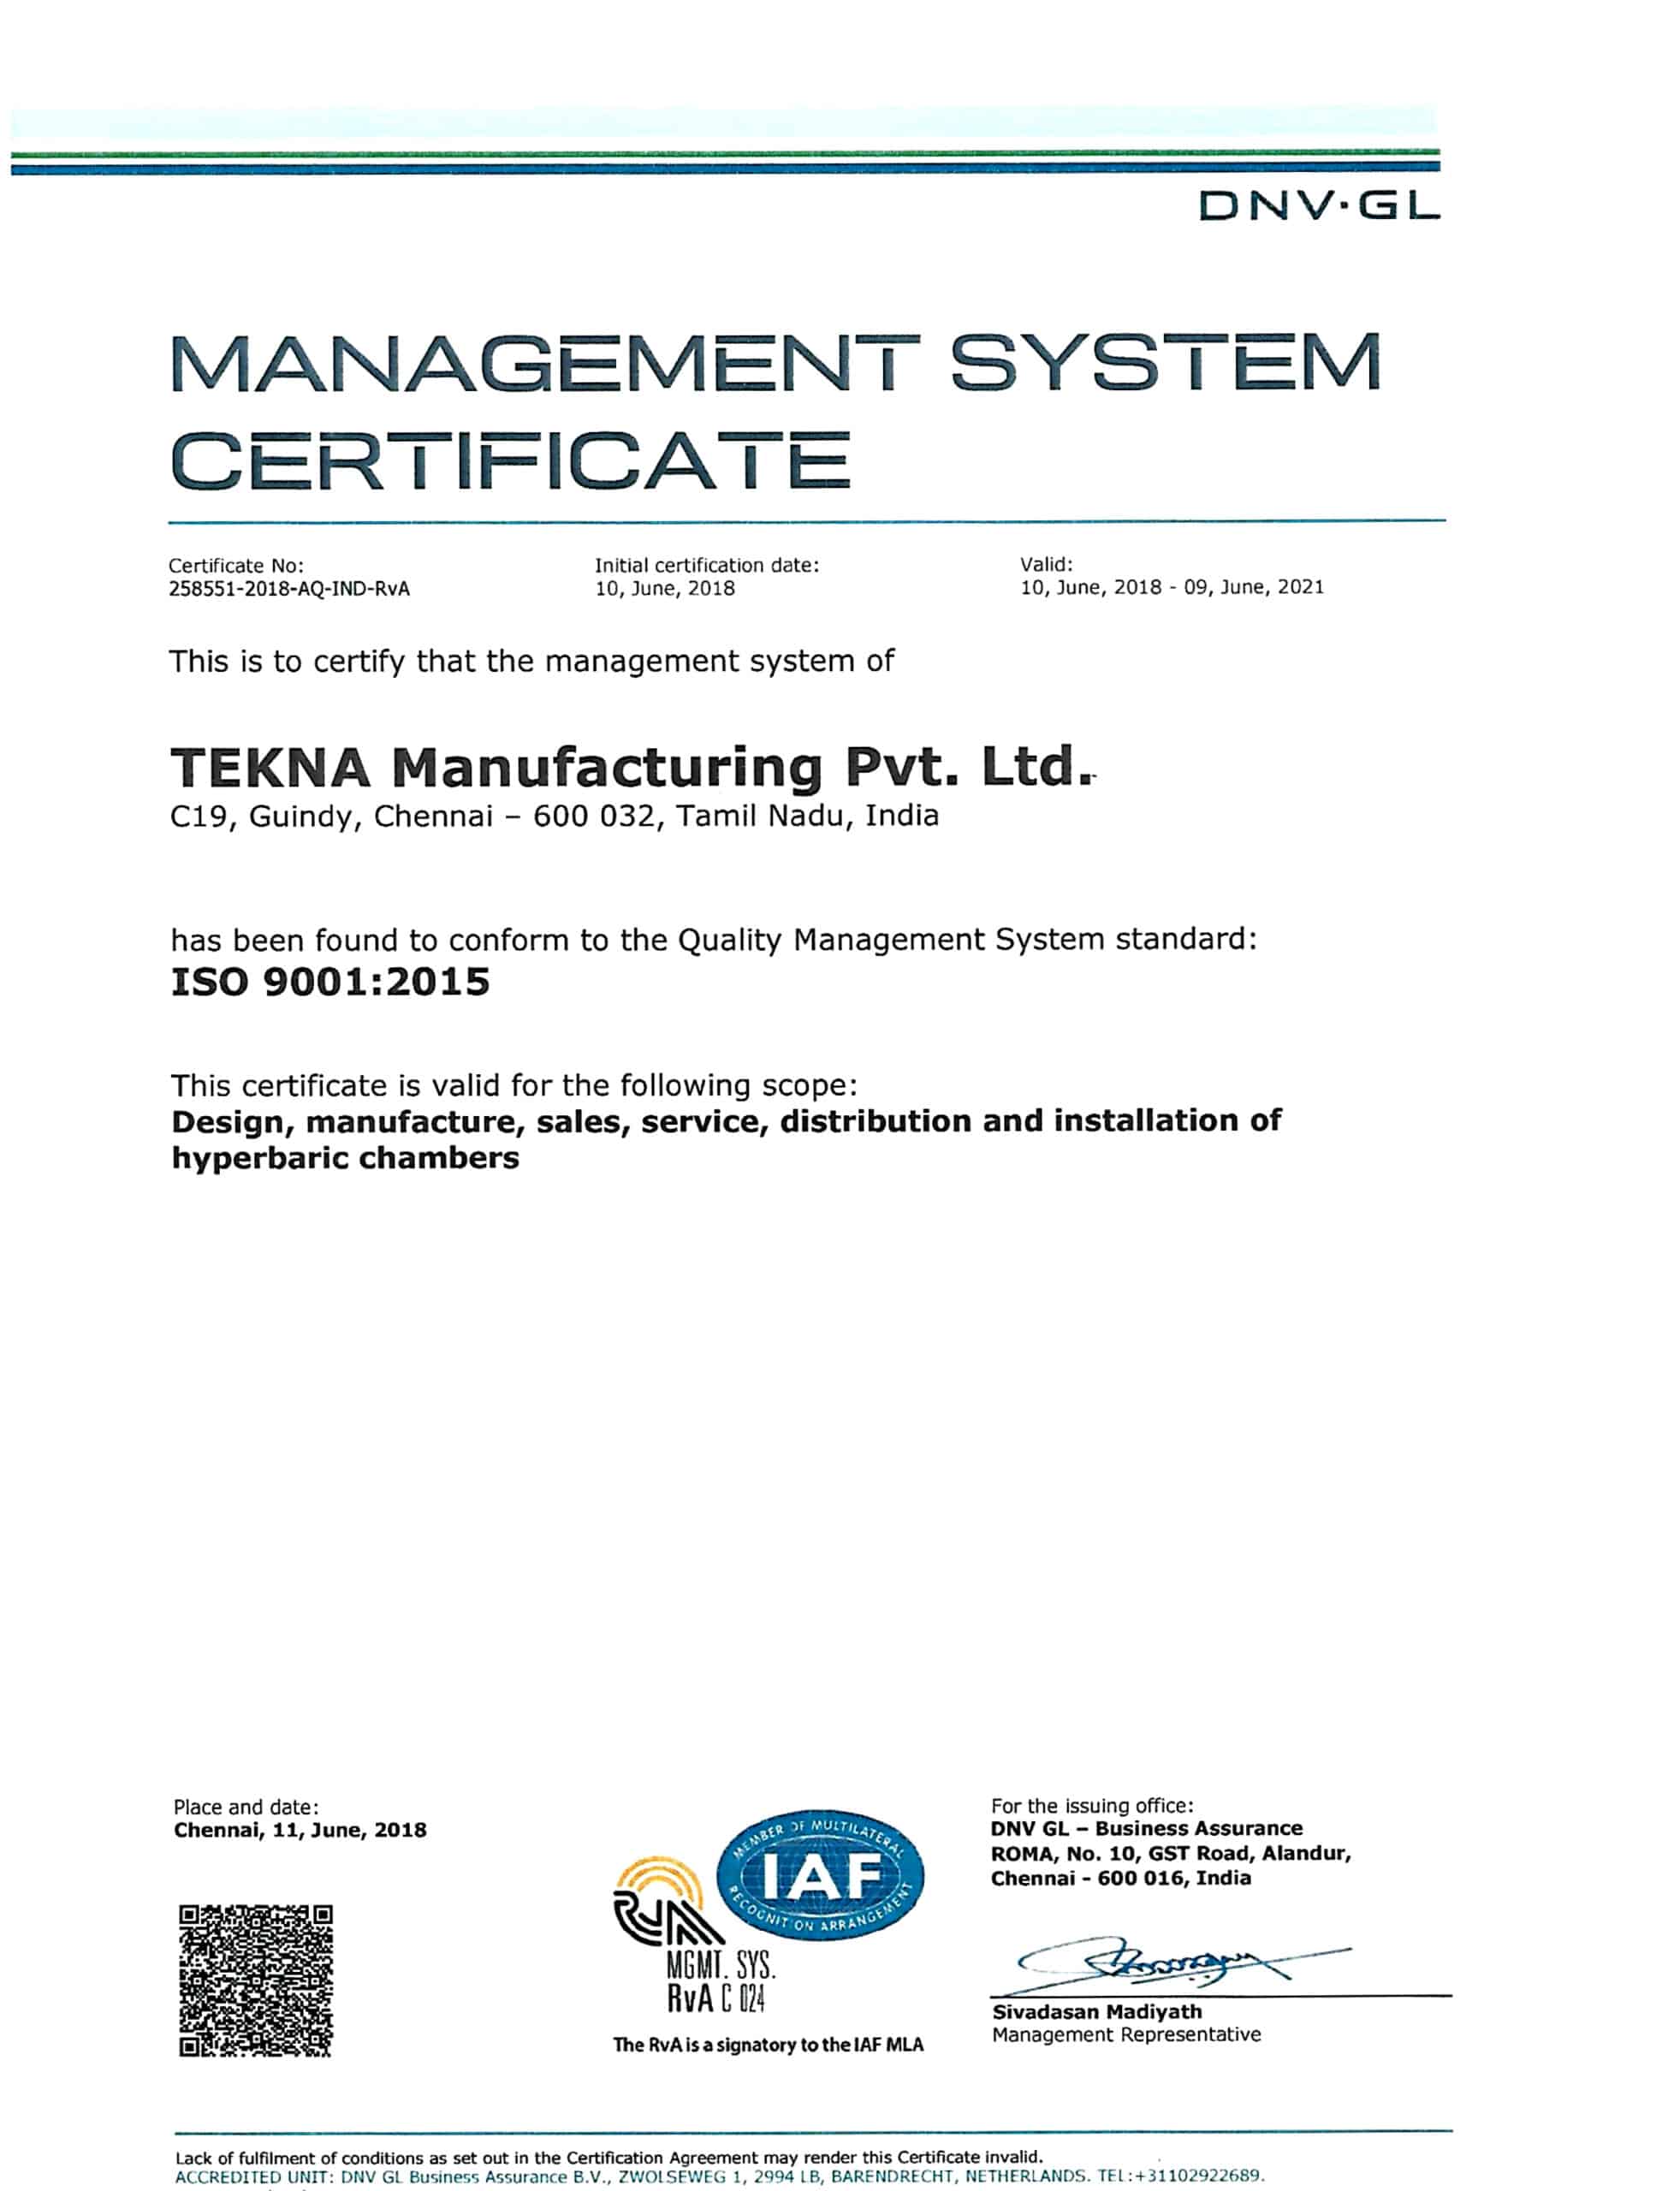 TEKNA SAURARA ISO 9001-2015